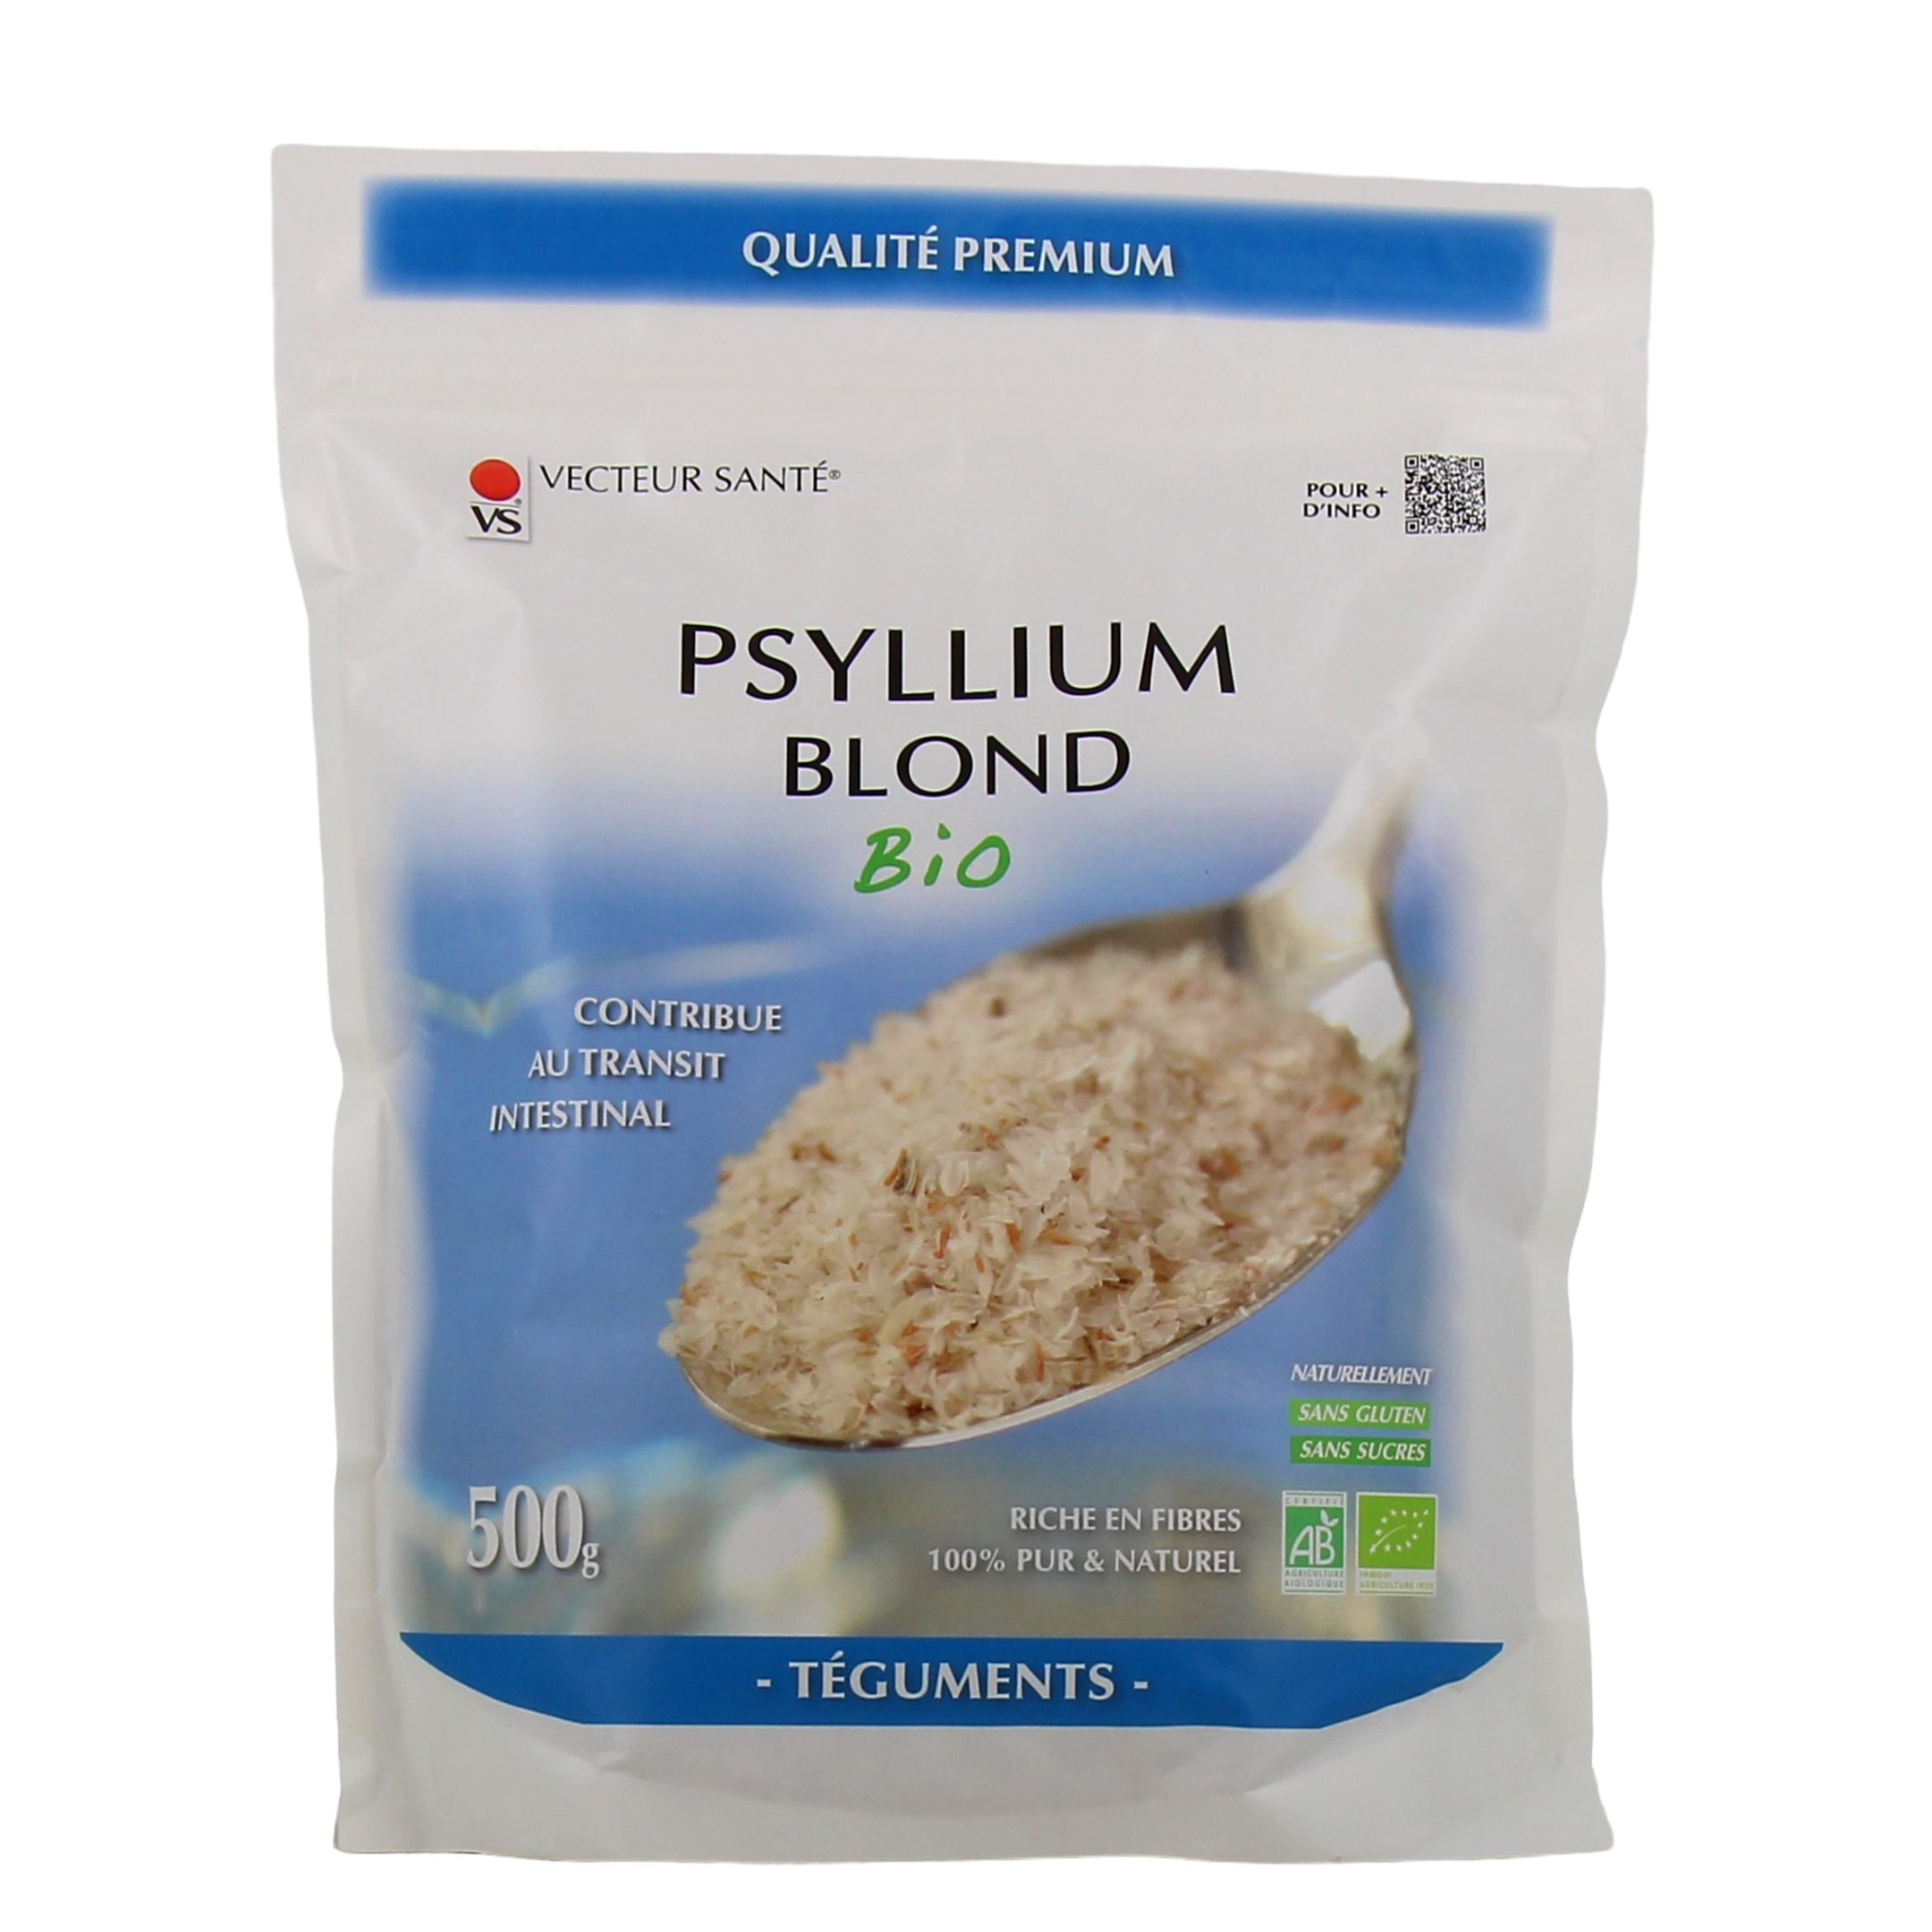 Psyllium blond bio